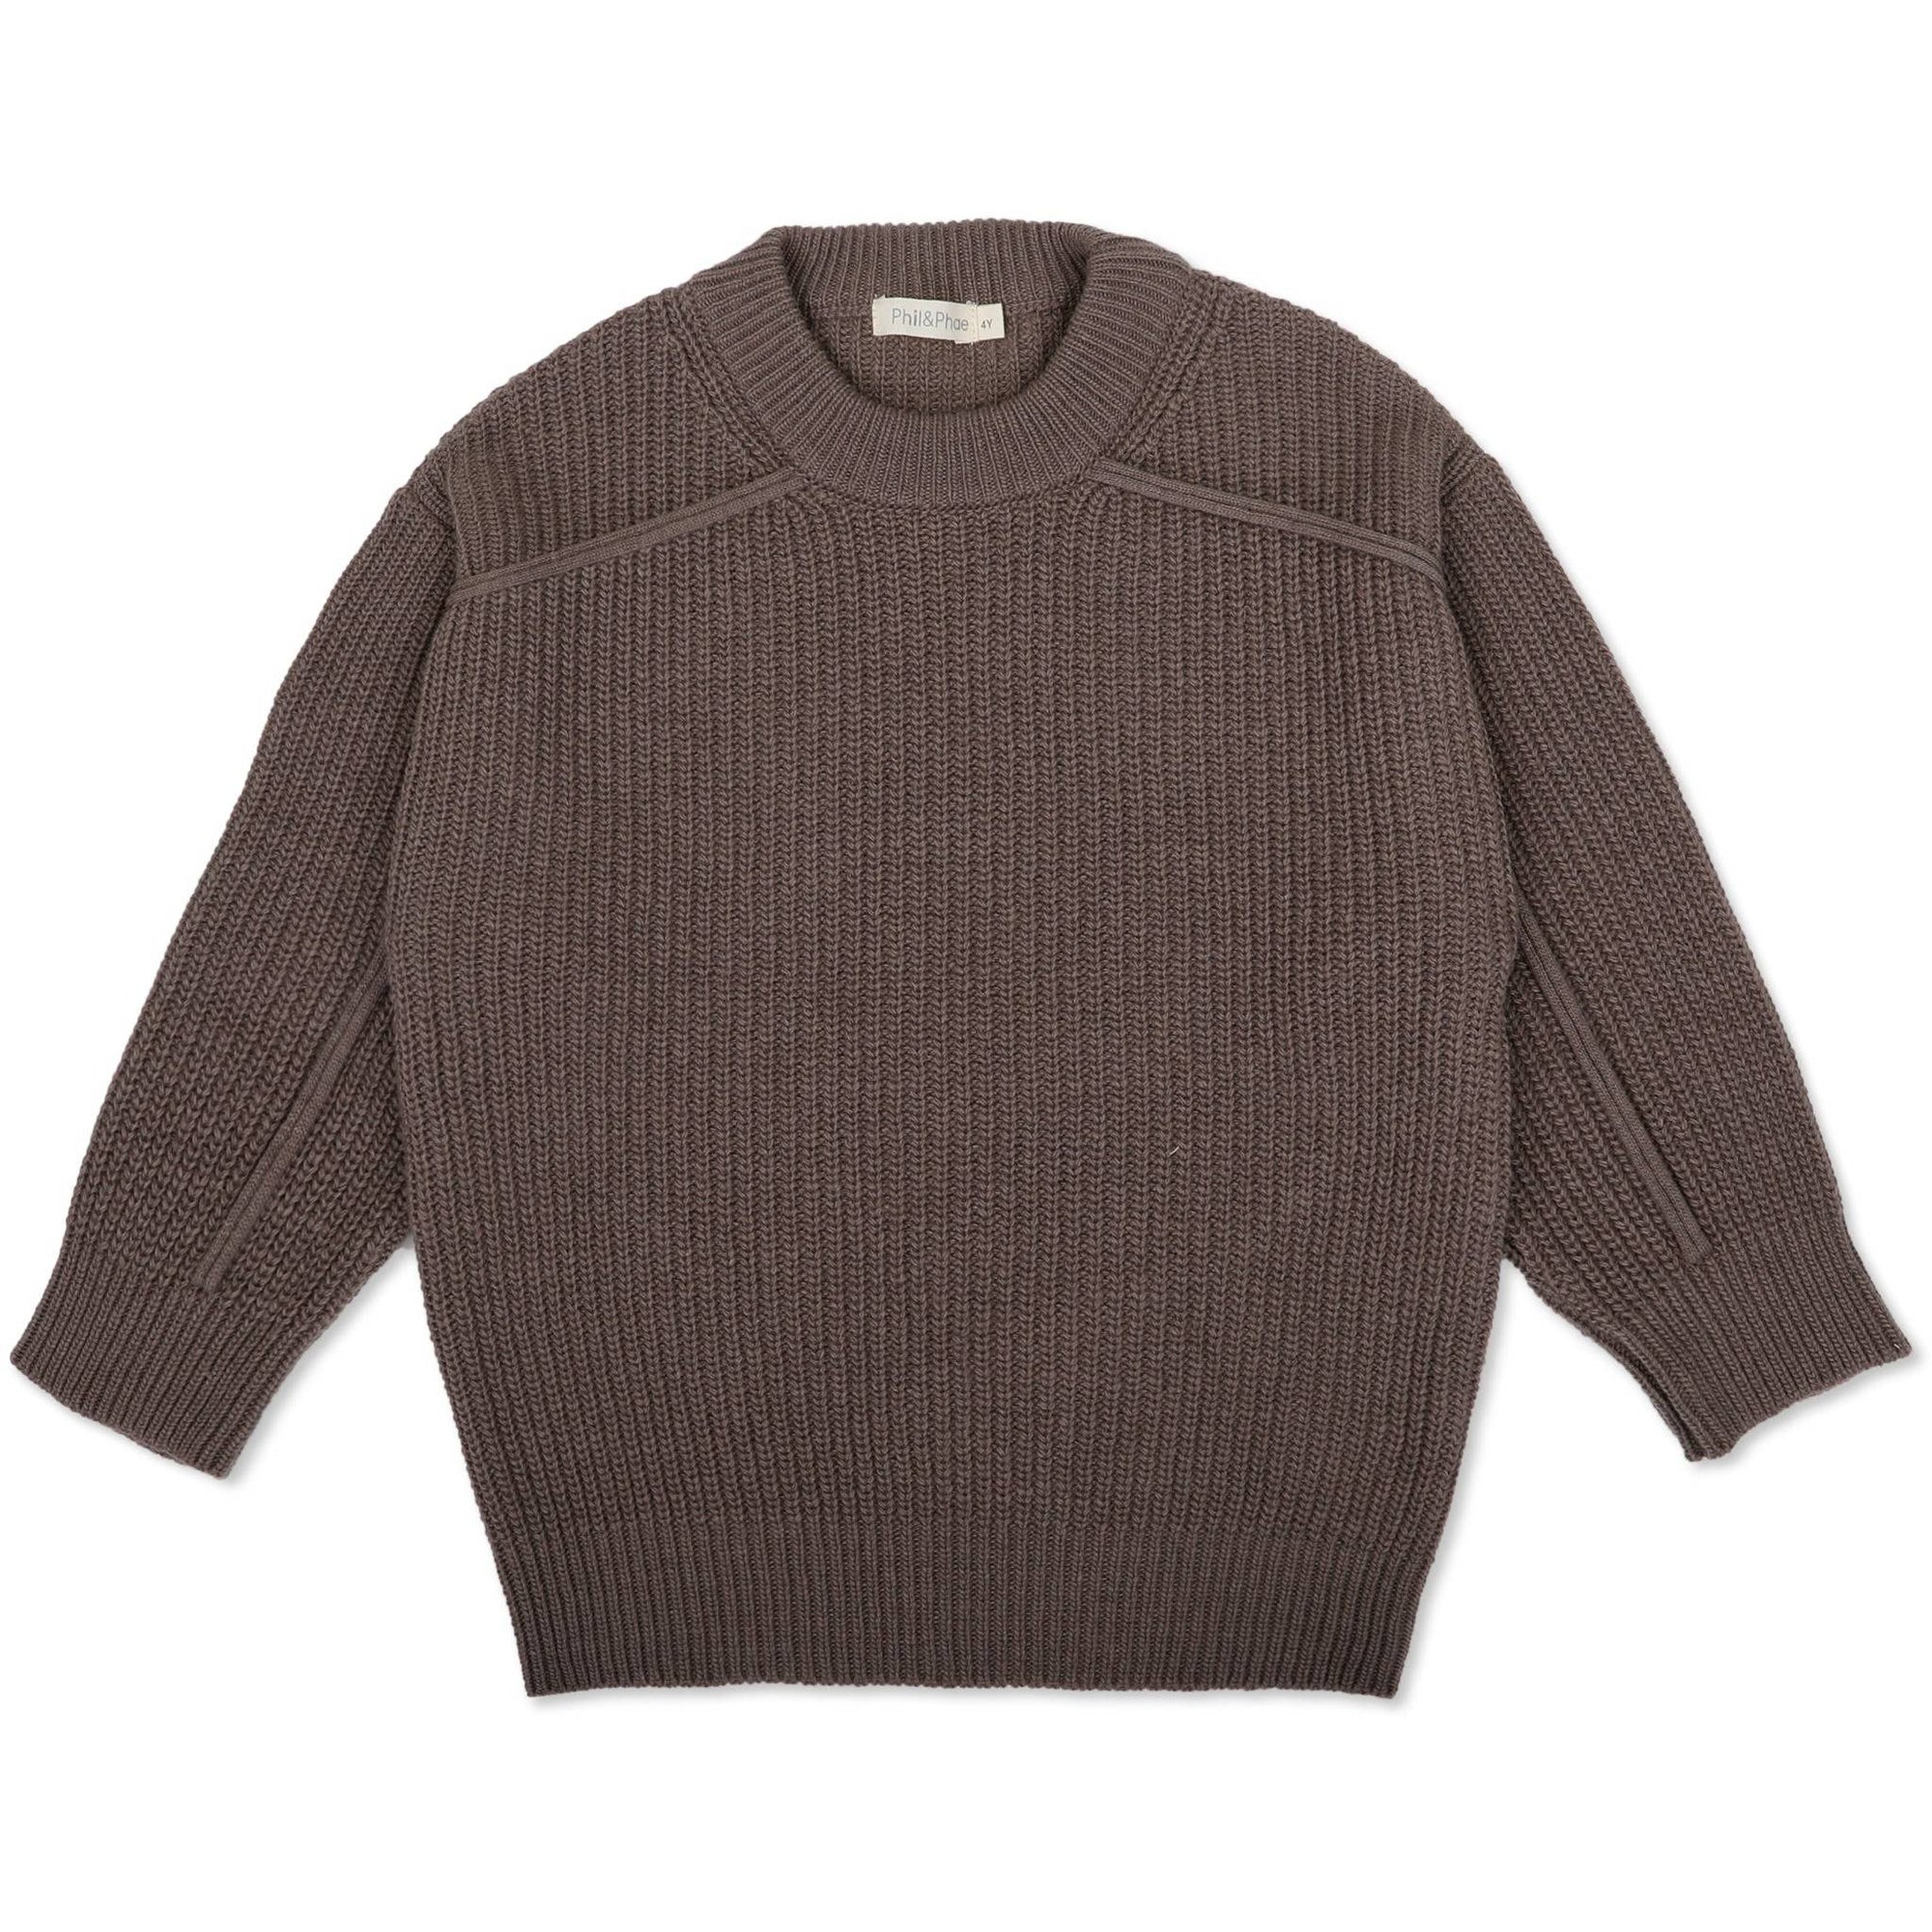 Sweater - Cashmere-blend knit